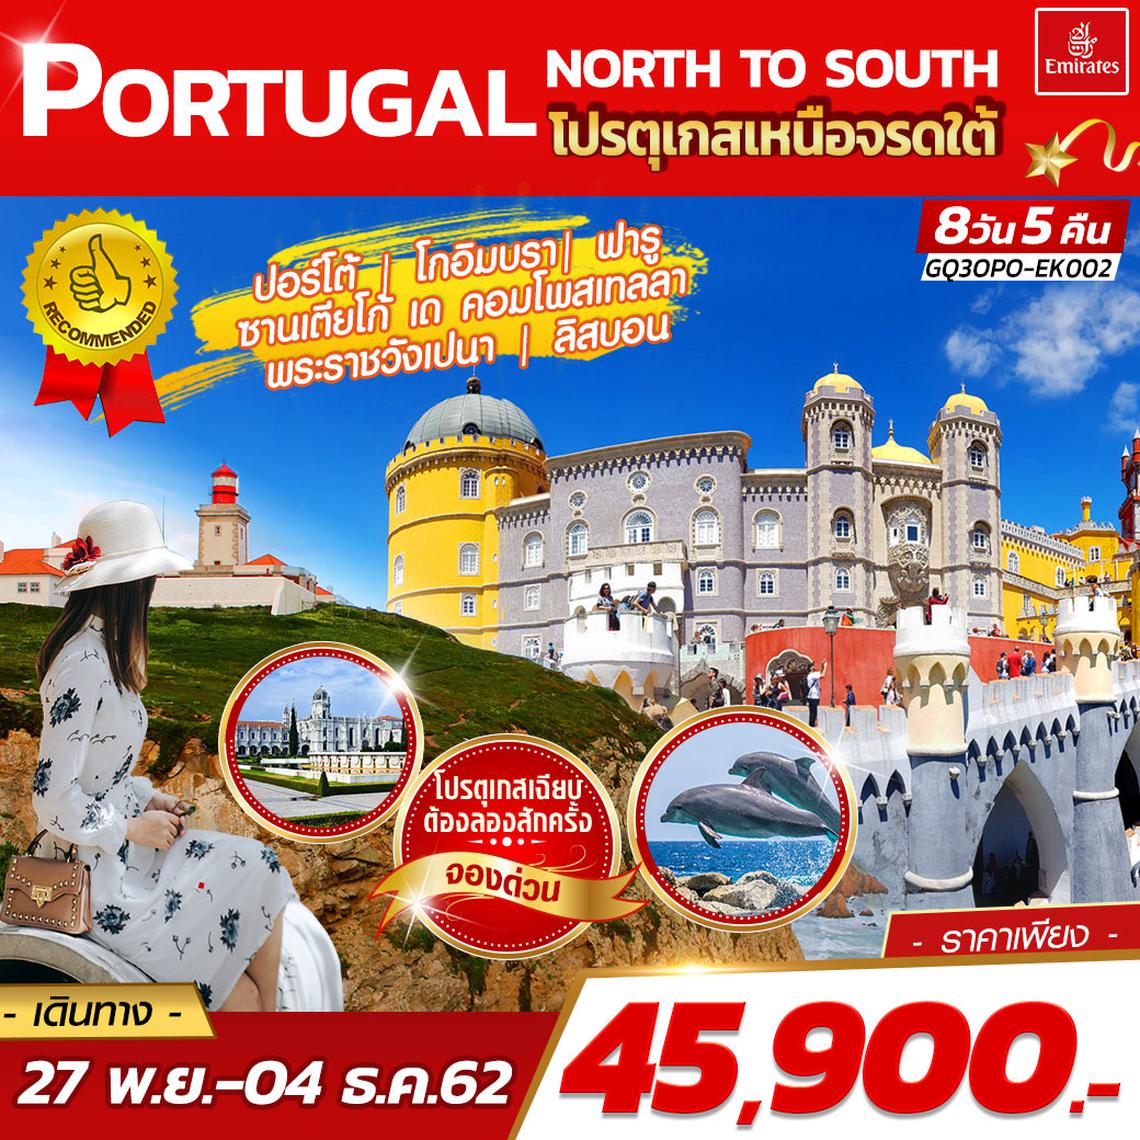 PORTUGAL NORTH TO SOUTH โปรตุเกสเหนือจรดใต้ 8 DAYS 5 NIGHTS โดยสายการบินเอมิเรตส์ (EK)